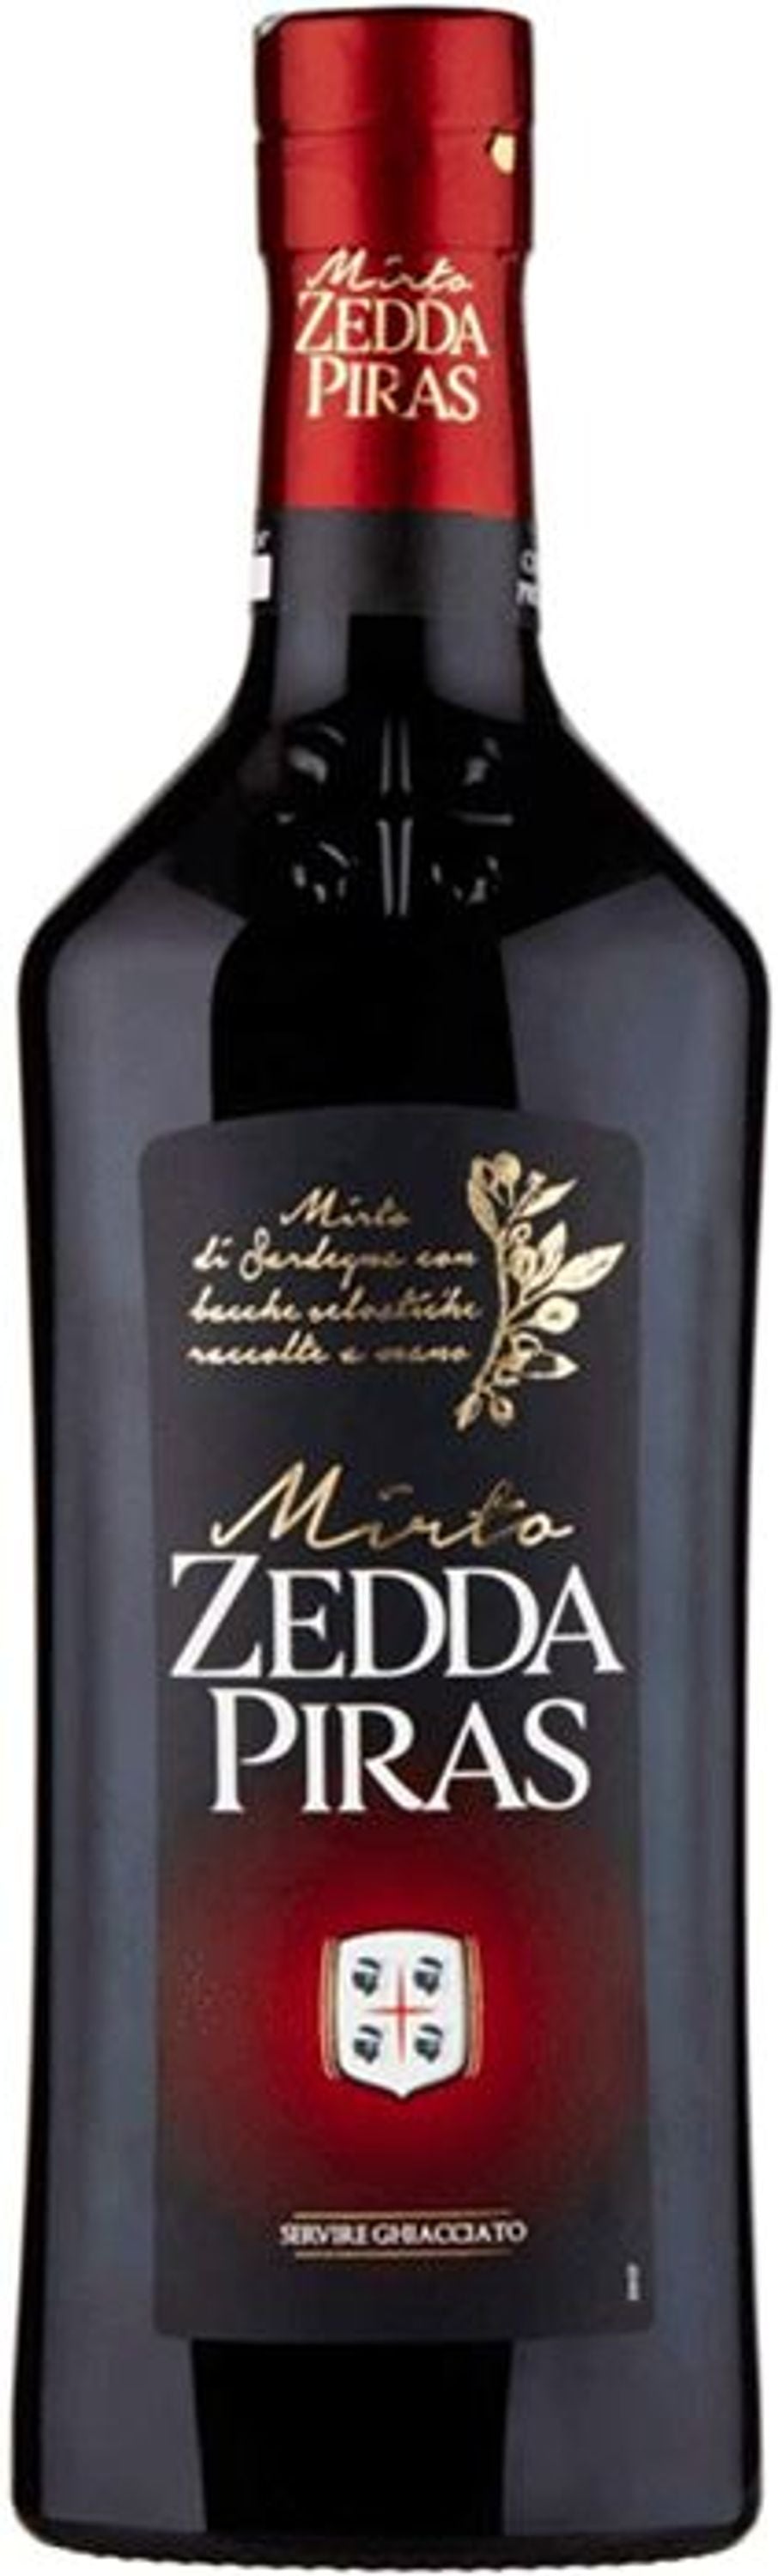 Zedda Piras Mirto Rosso 0.7l, alc. 32% by volume, myrtle liqueur